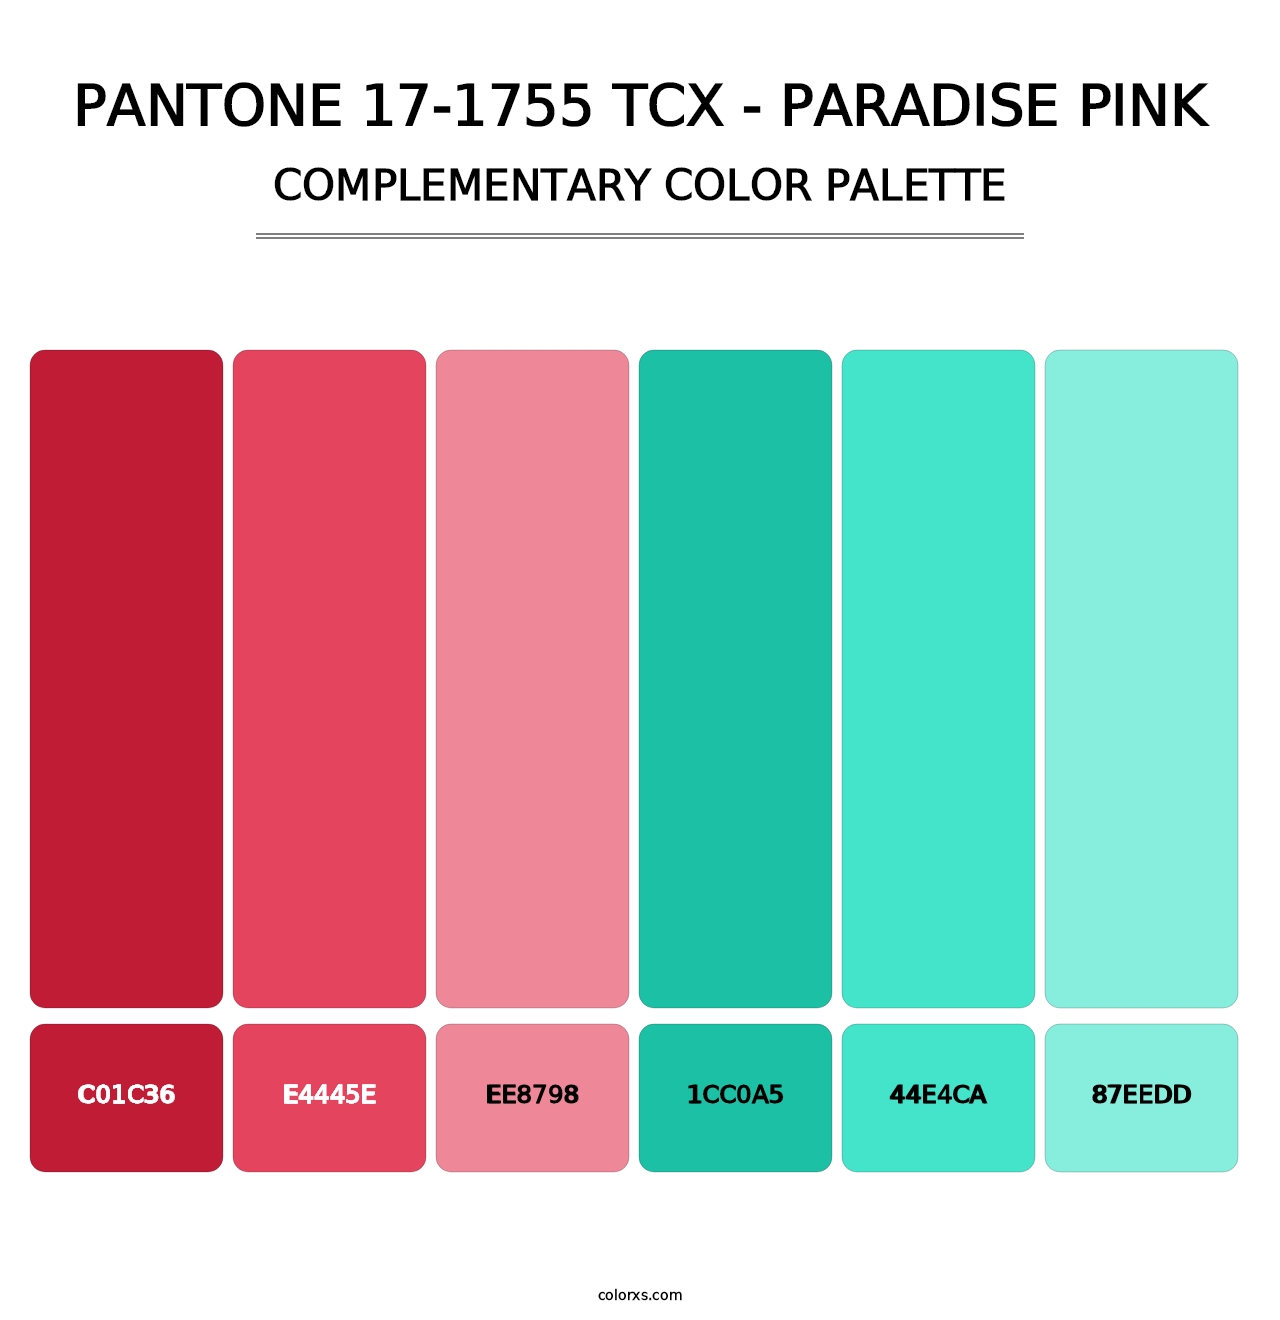 PANTONE 17-1755 TCX - Paradise Pink - Complementary Color Palette